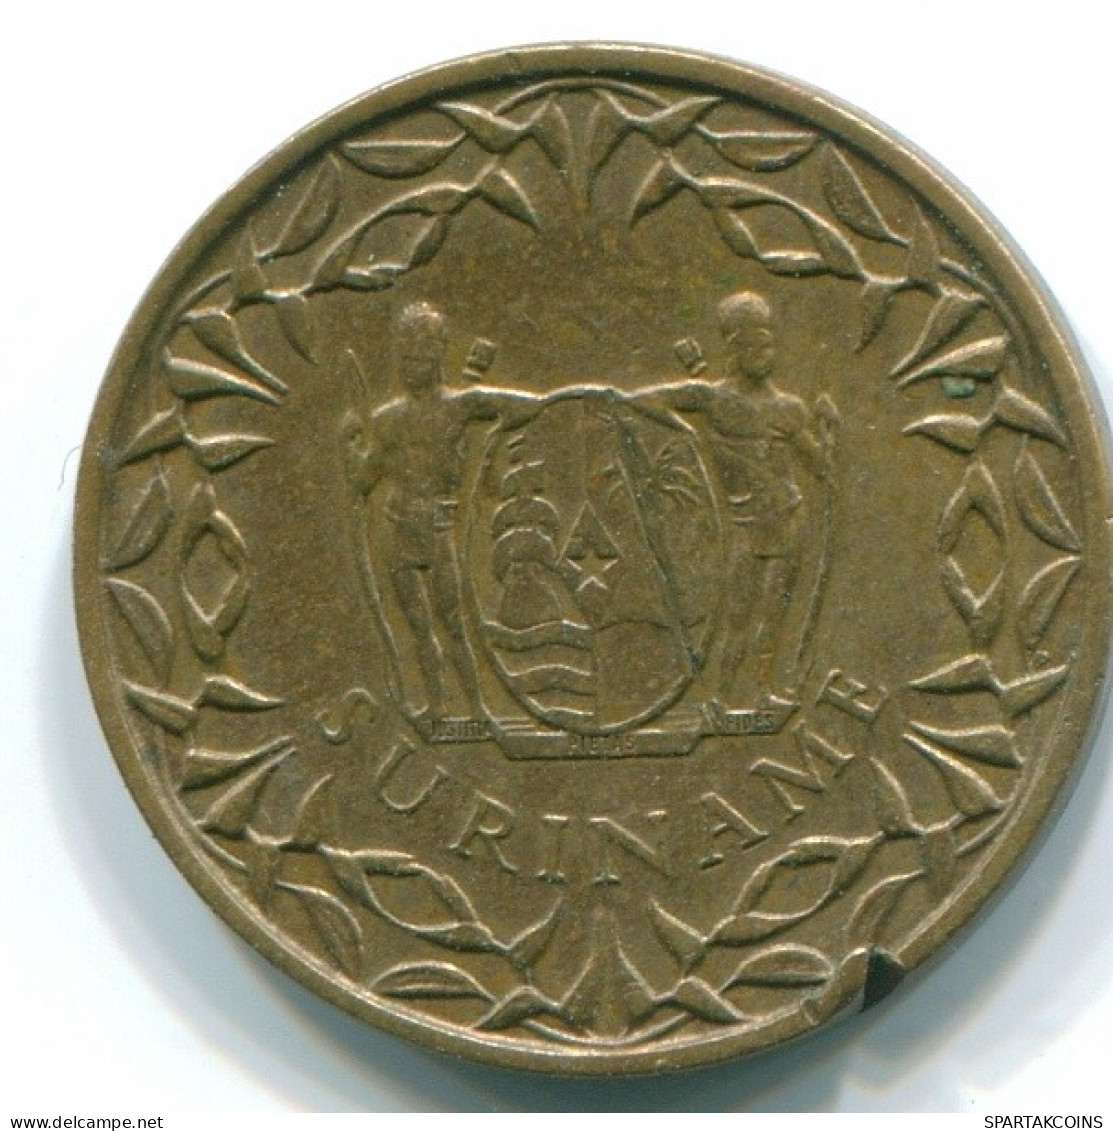 1 CENT 1962 SURINAME Netherlands Bronze Fish Colonial Coin #S10884.U.A - Surinam 1975 - ...